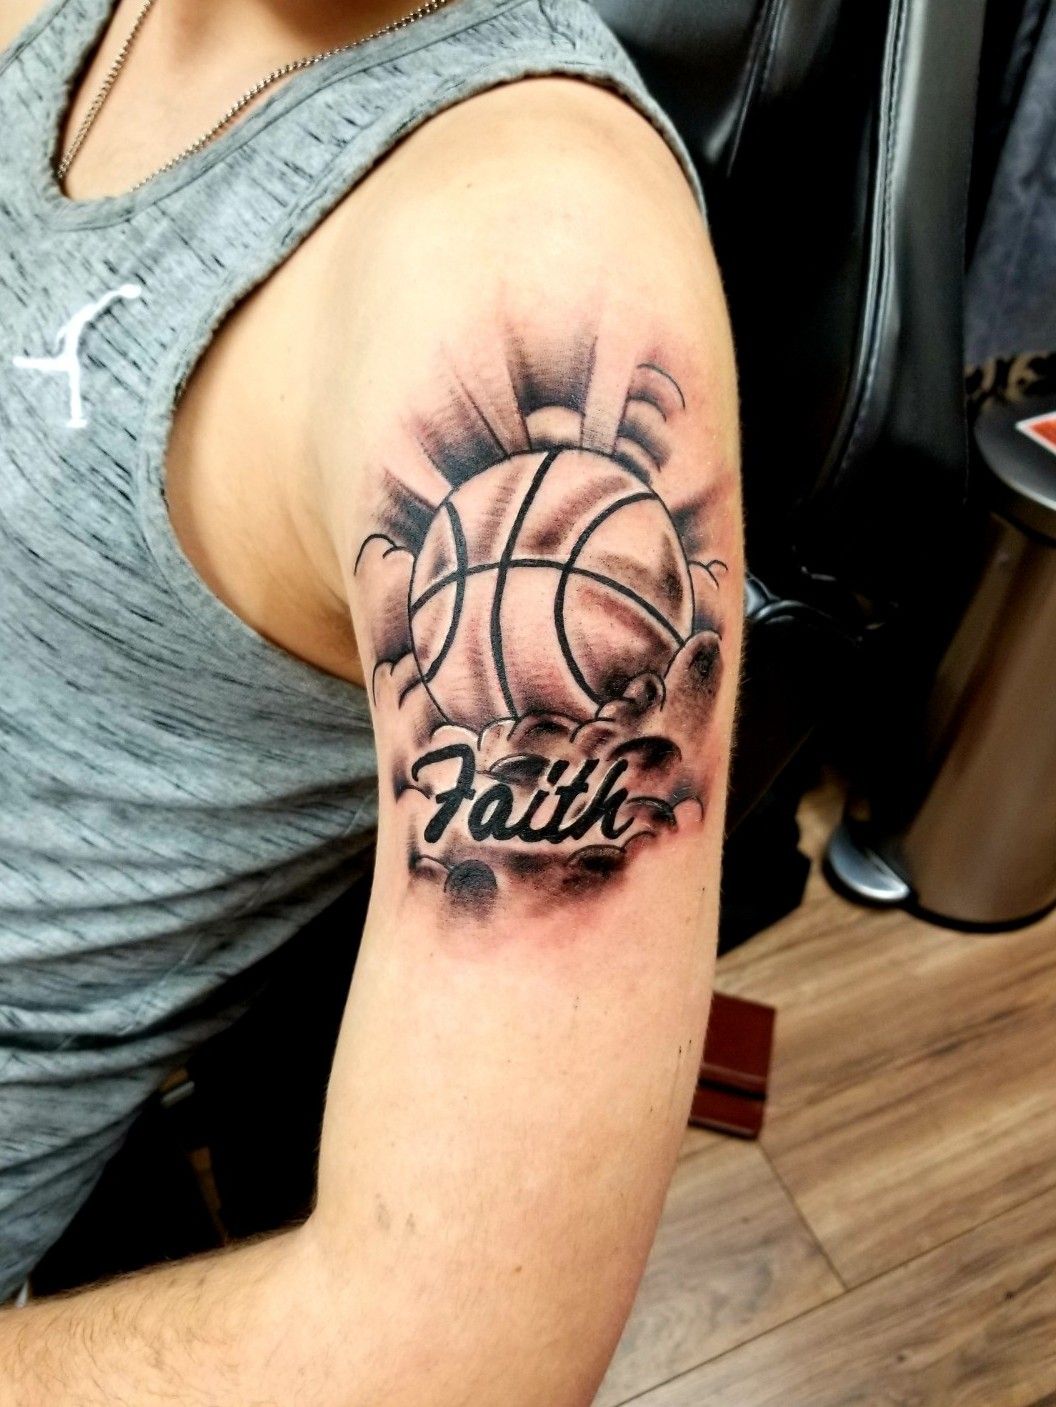 299US  25 OFFThe King Of Basketball Waterproof Large Temporary Tattoos  Arm Tattoo Sleeve Selfie Flash Tattoo K  Arm tattoo Sleeve tattoos Basketball  tattoos